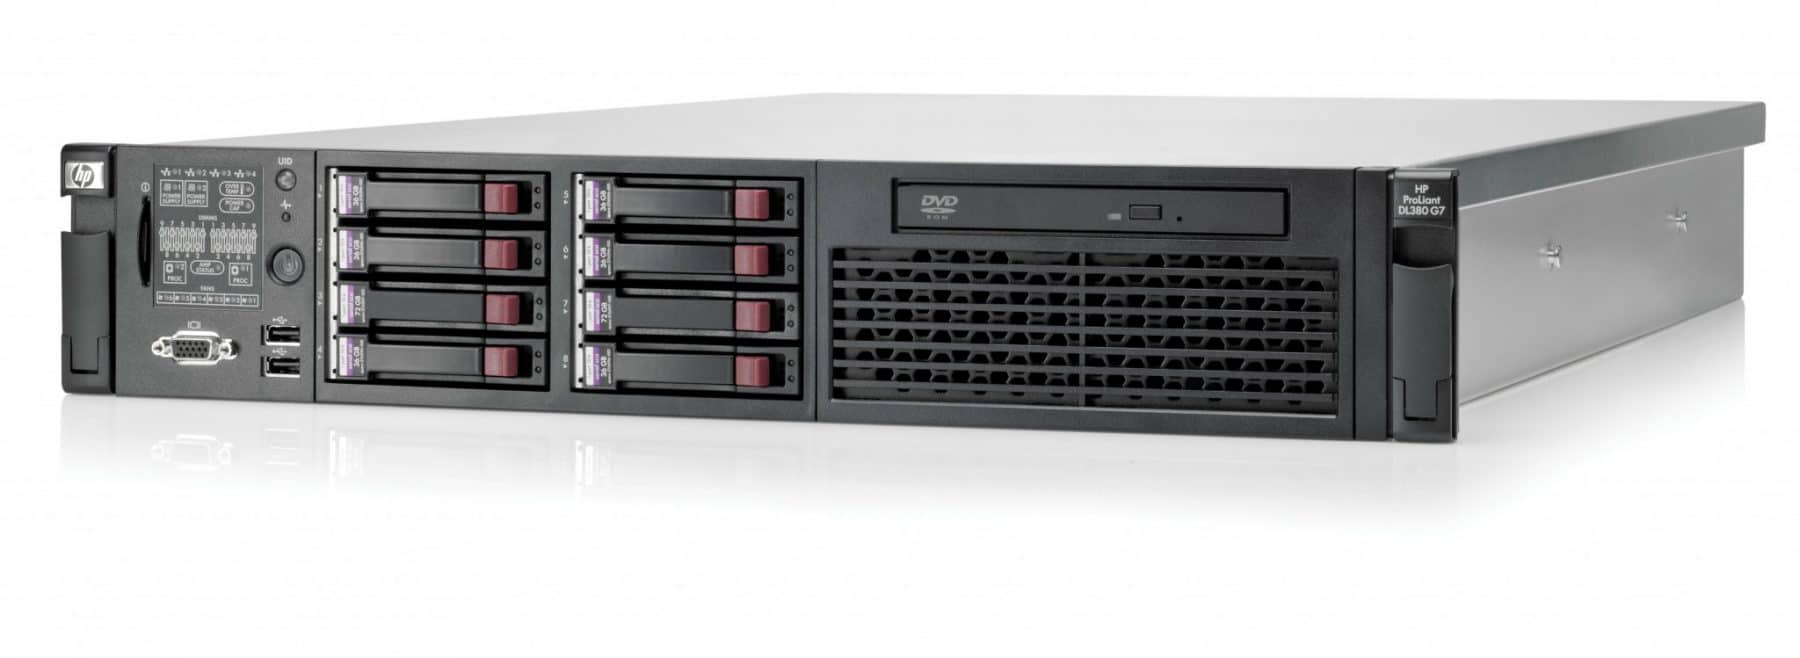 HP PROLIANT DL380 G7 - 8 BAY 2.5" - 2 X XEON L5630 - 32GB DDR3 - NO CADDIES - NO DRIVES - NO RAIL KIT - 2U ENTERPRISE SERVER